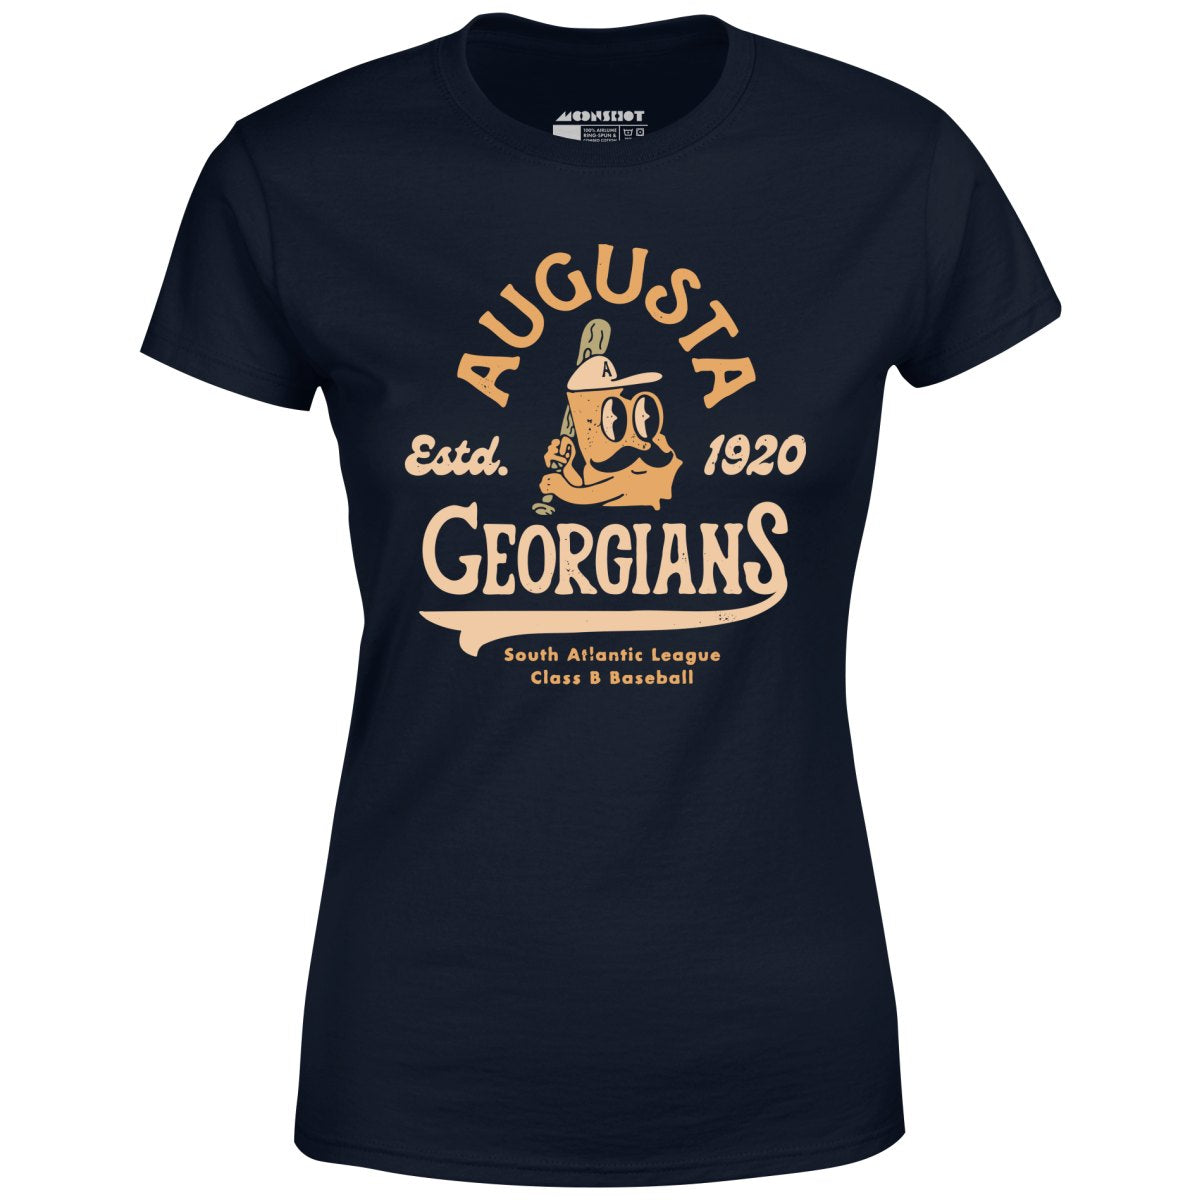 Augusta Georgians - Georgia - Vintage Defunct Baseball Teams - Women's T-Shirt